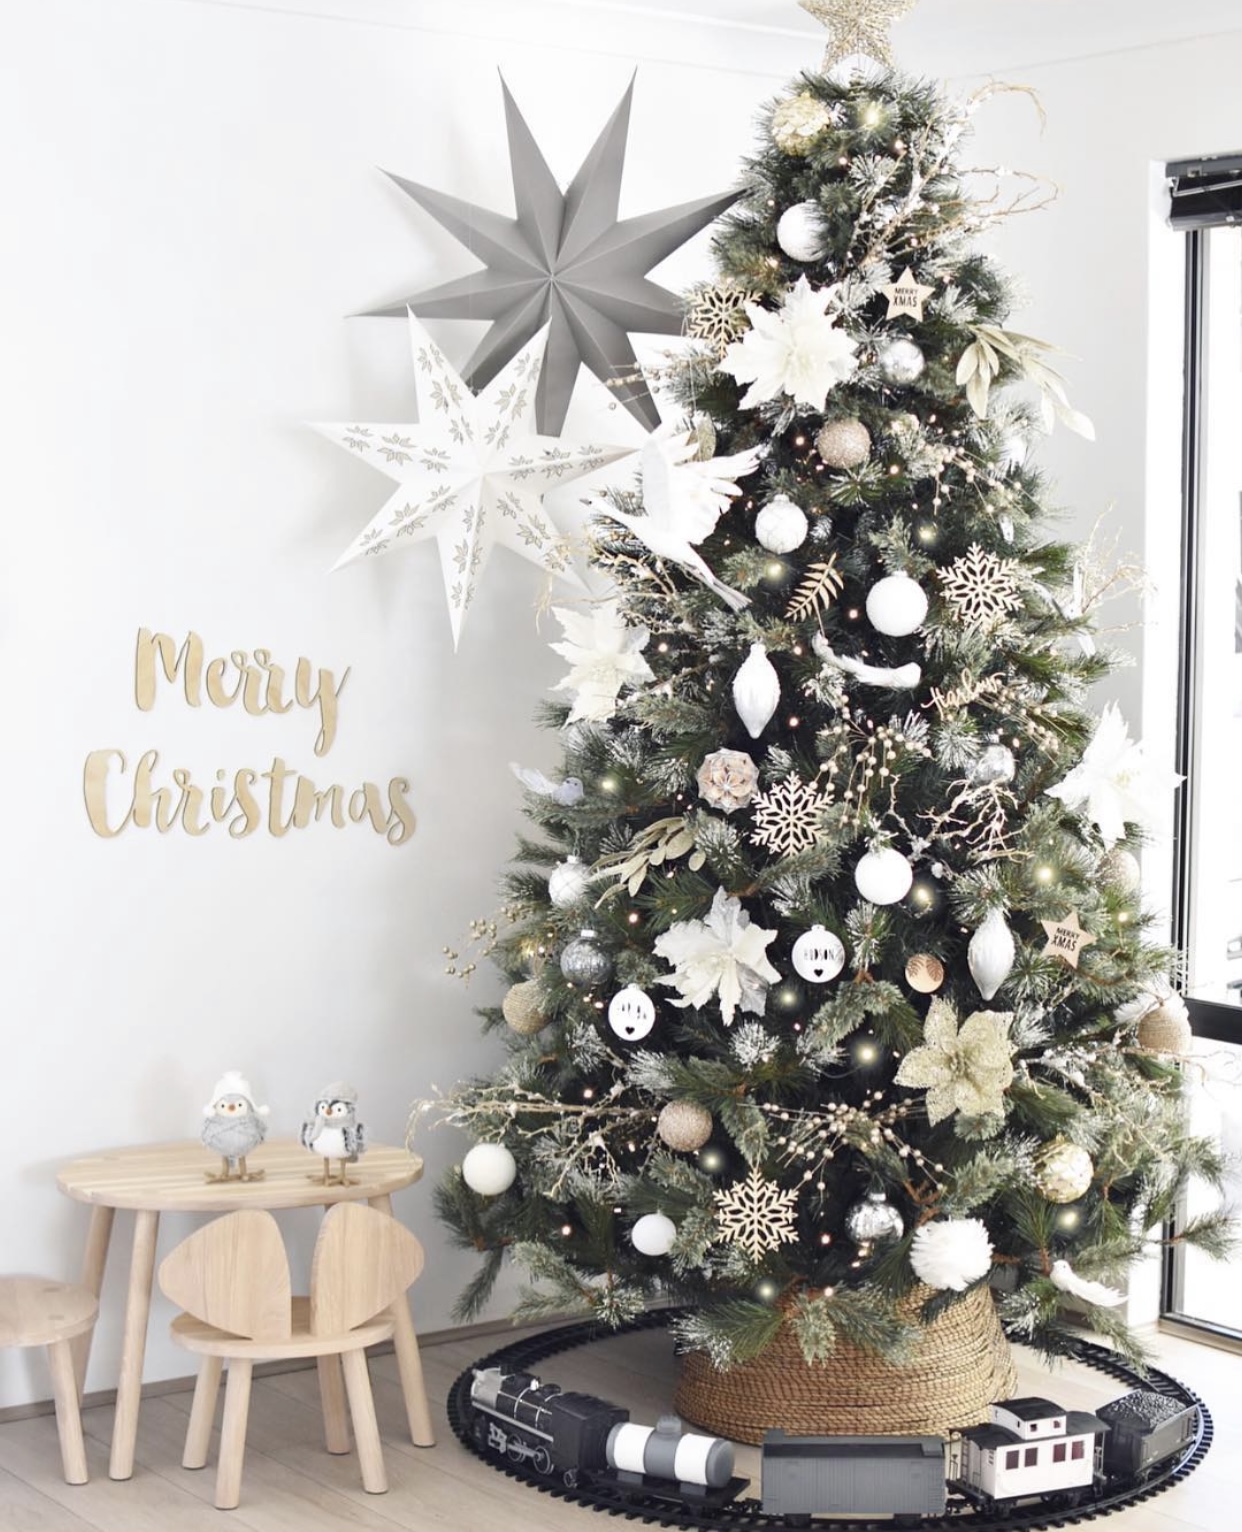 Kmart Christmas tree